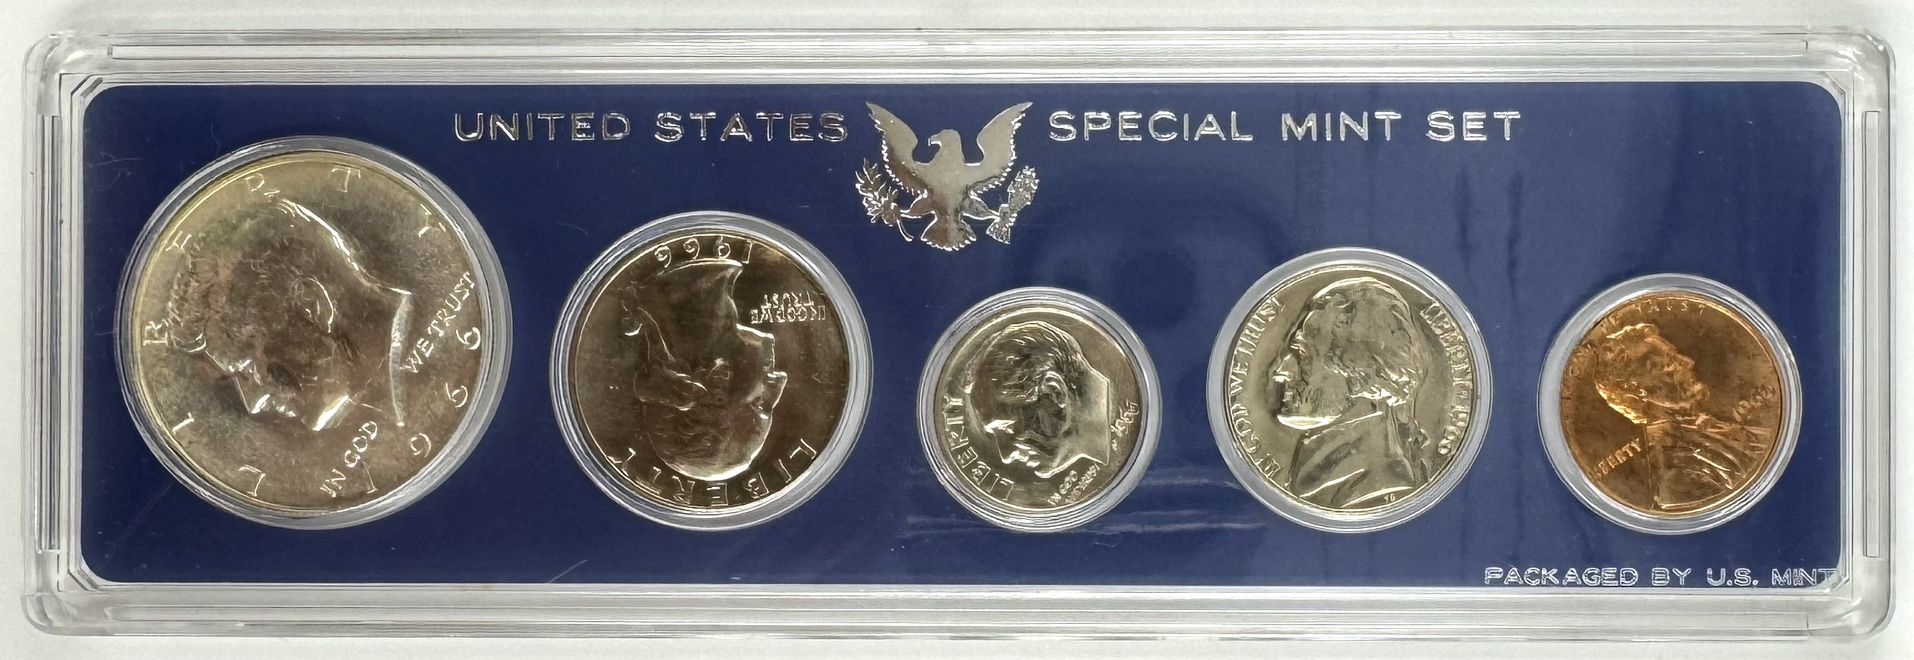 1966 United States Special Mint Set No Ogp 